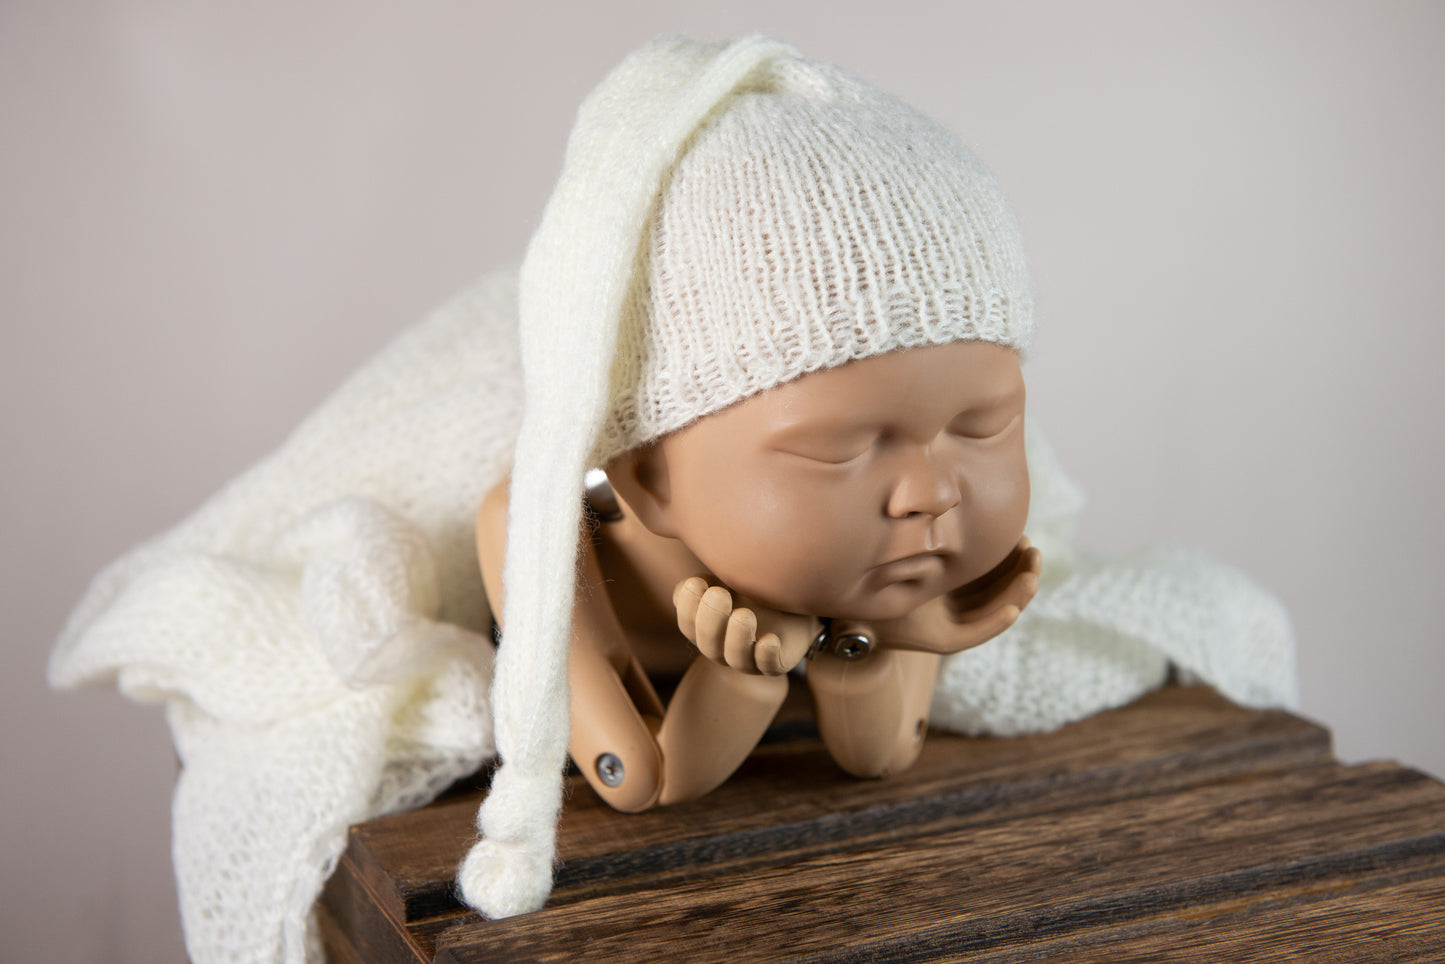 Gray knit hat on sleeping doll showcases newborn photography prop versatility.